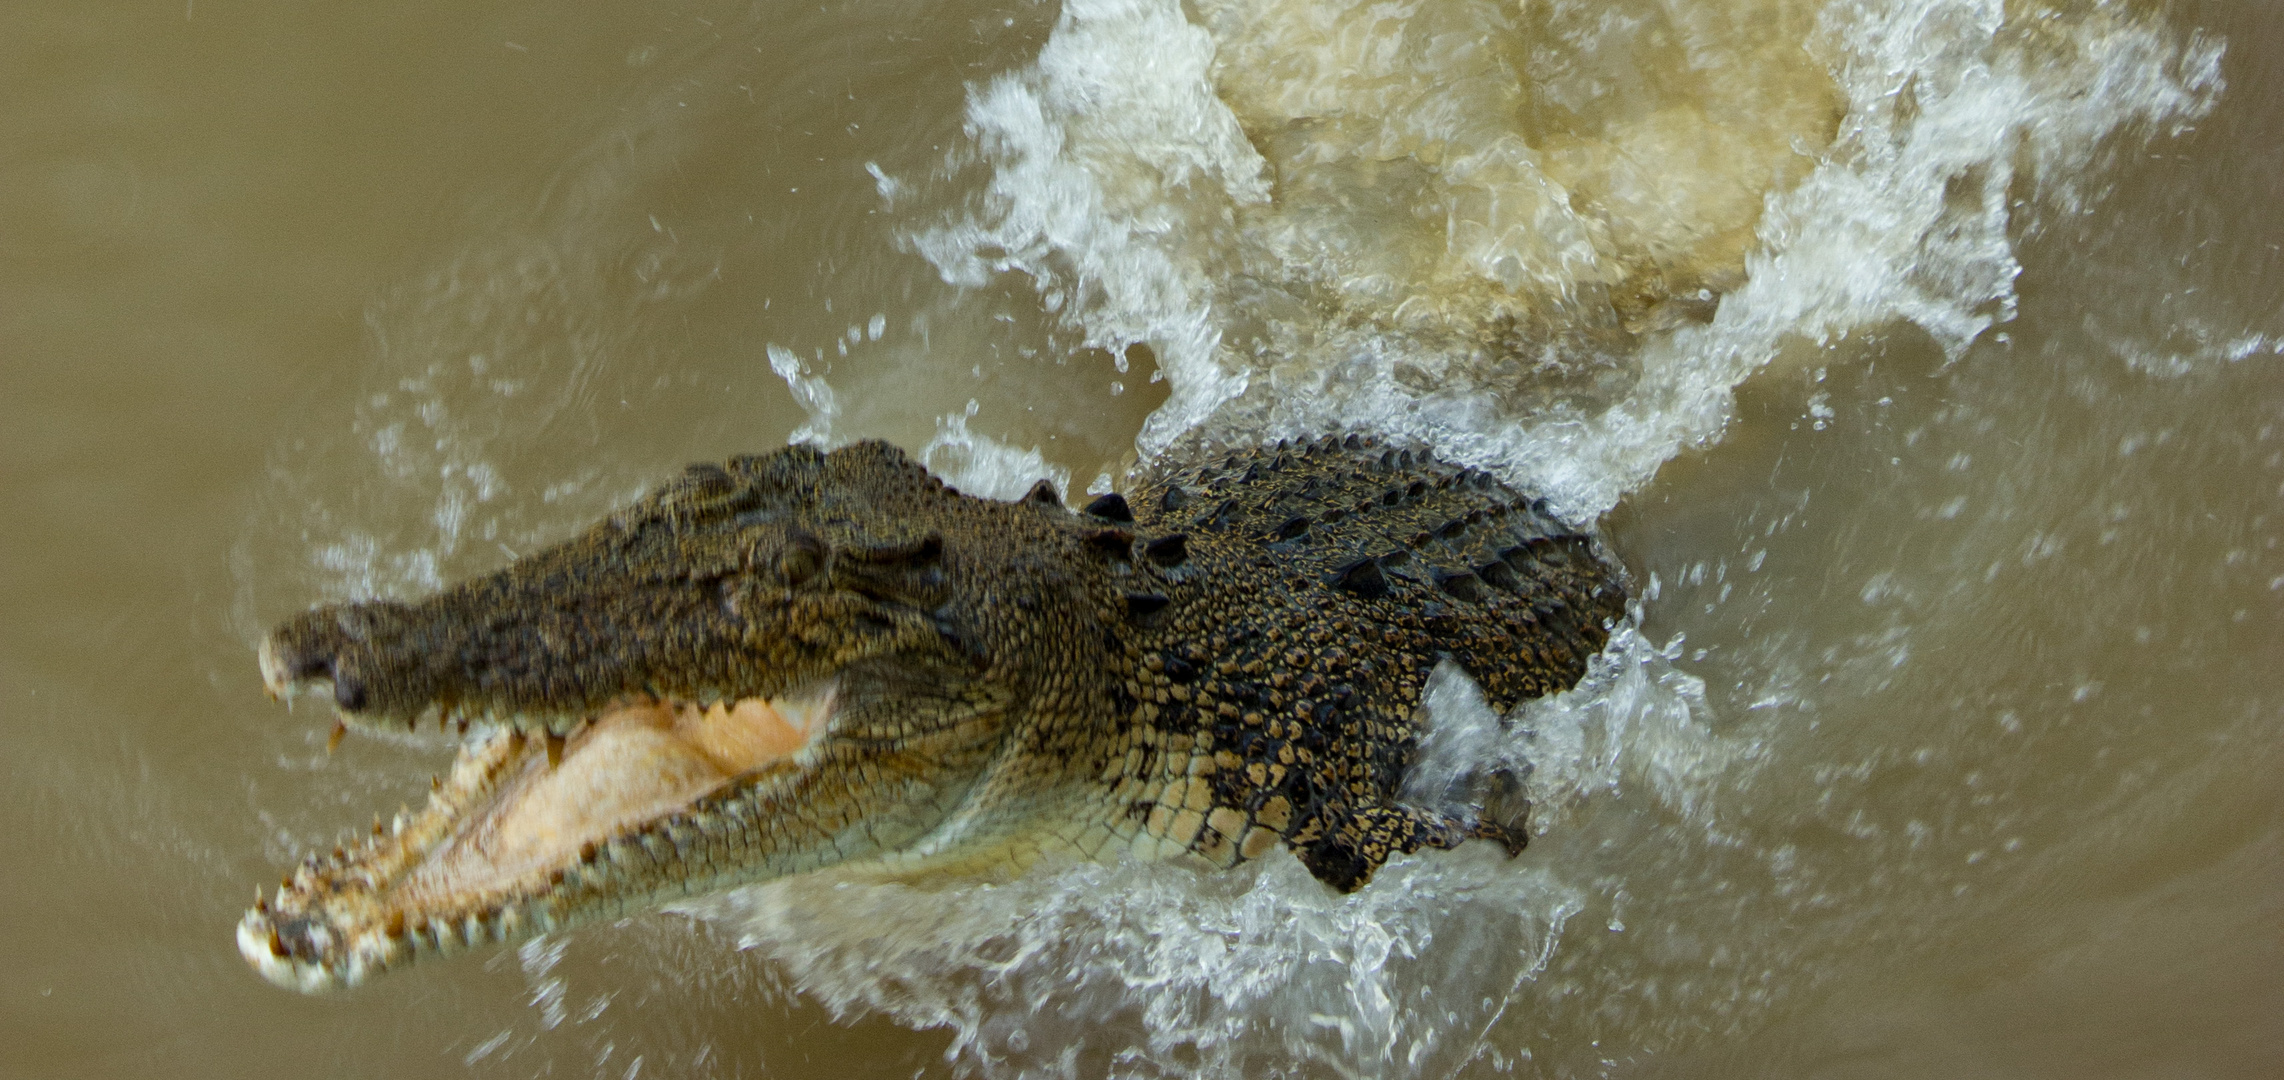 Jumpng Saltwater Croc, Adelaide River